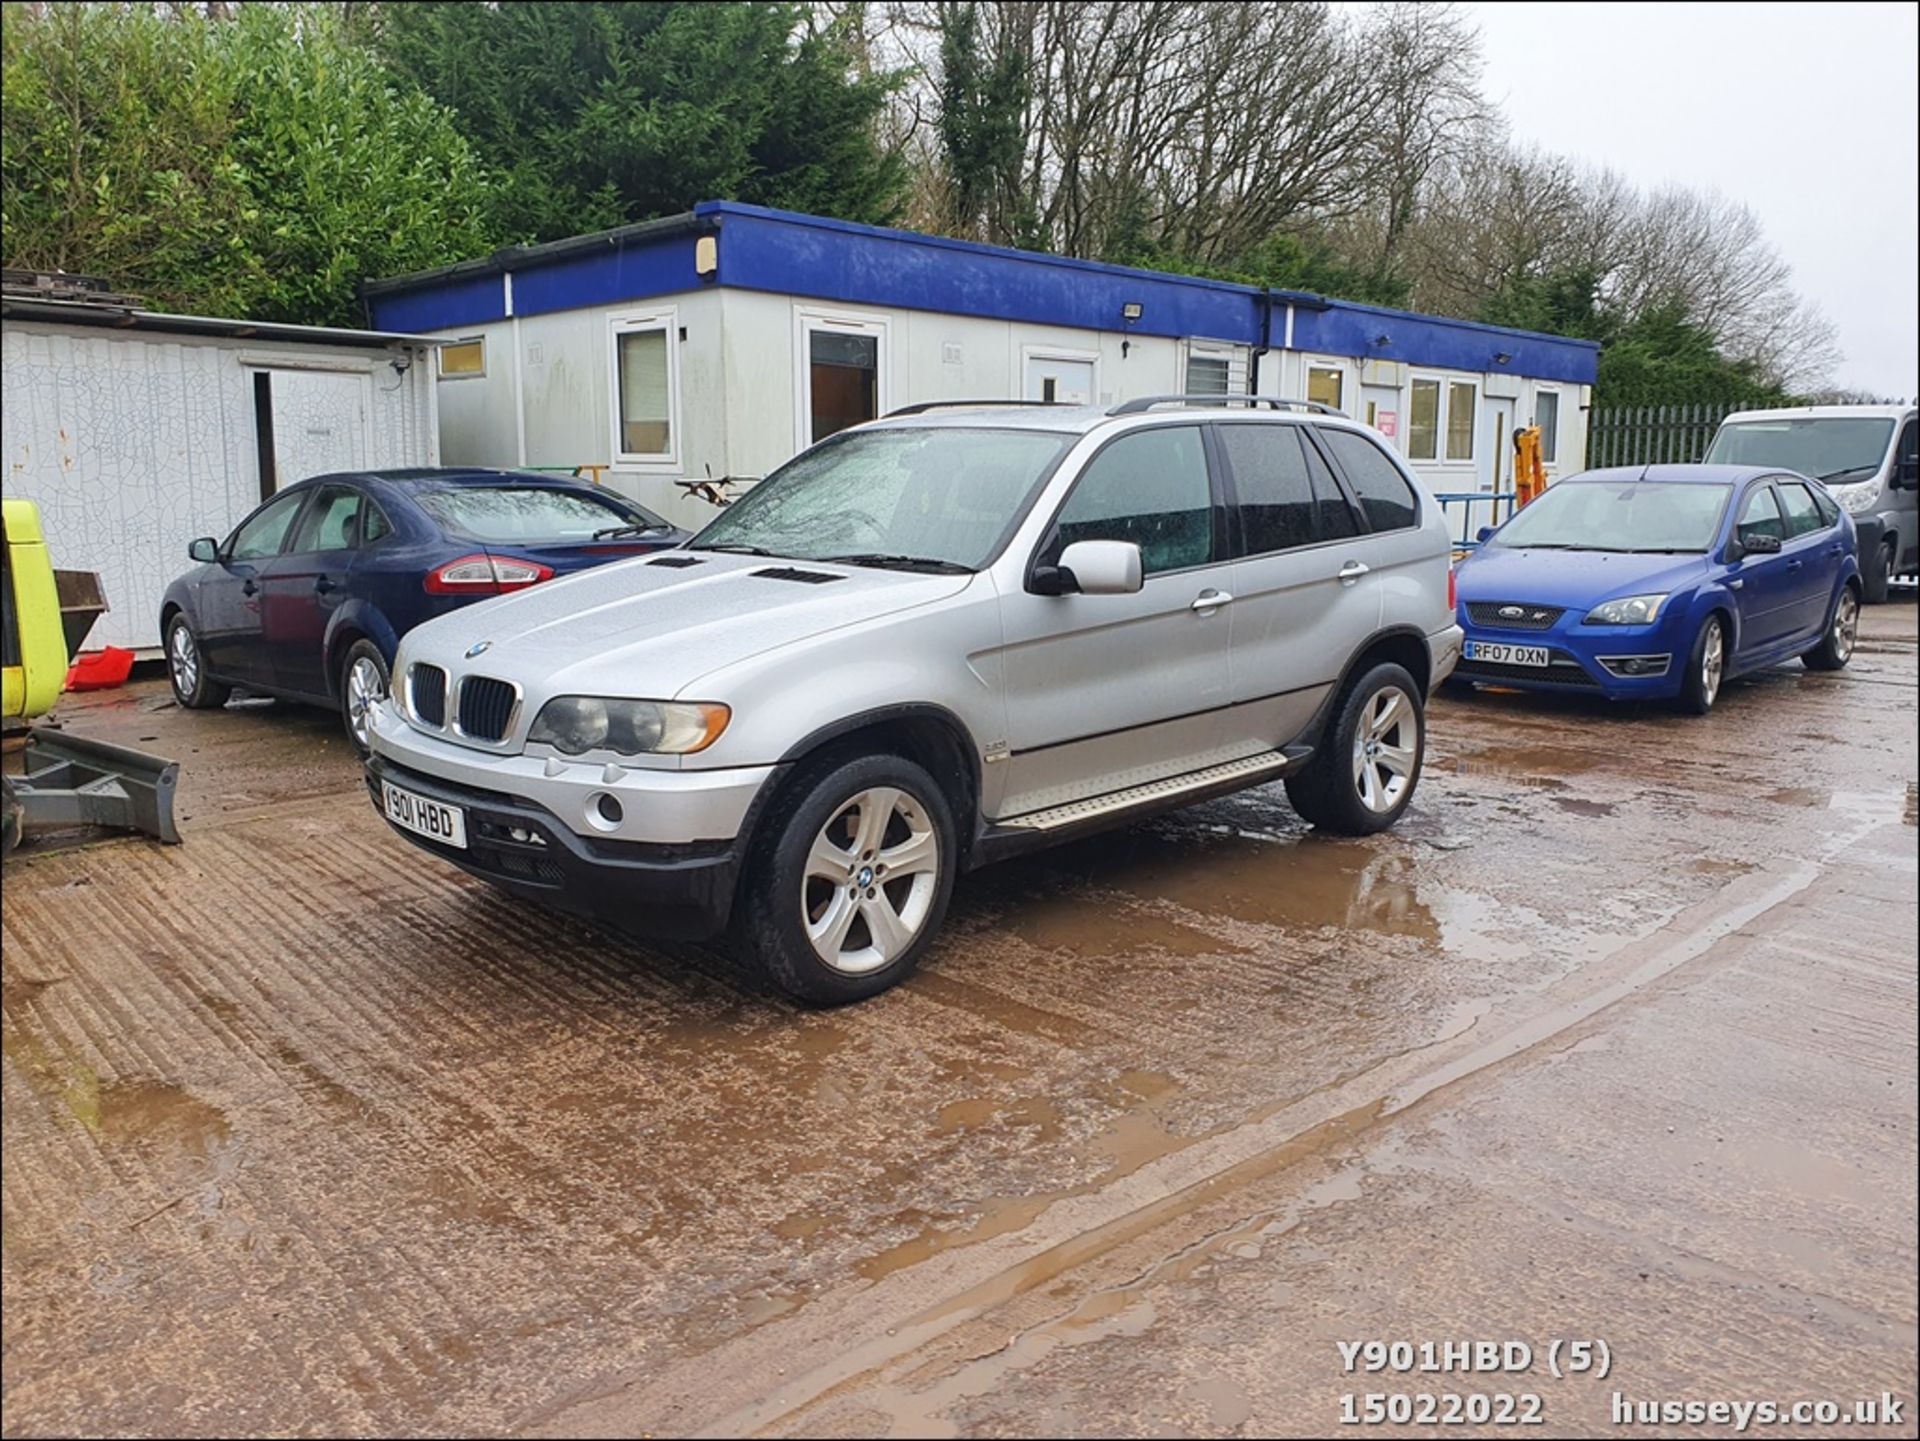 2001 BMW X5 SPORT AUTO - 2979cc 5dr Estate (Silver, 118k) - Image 6 of 41